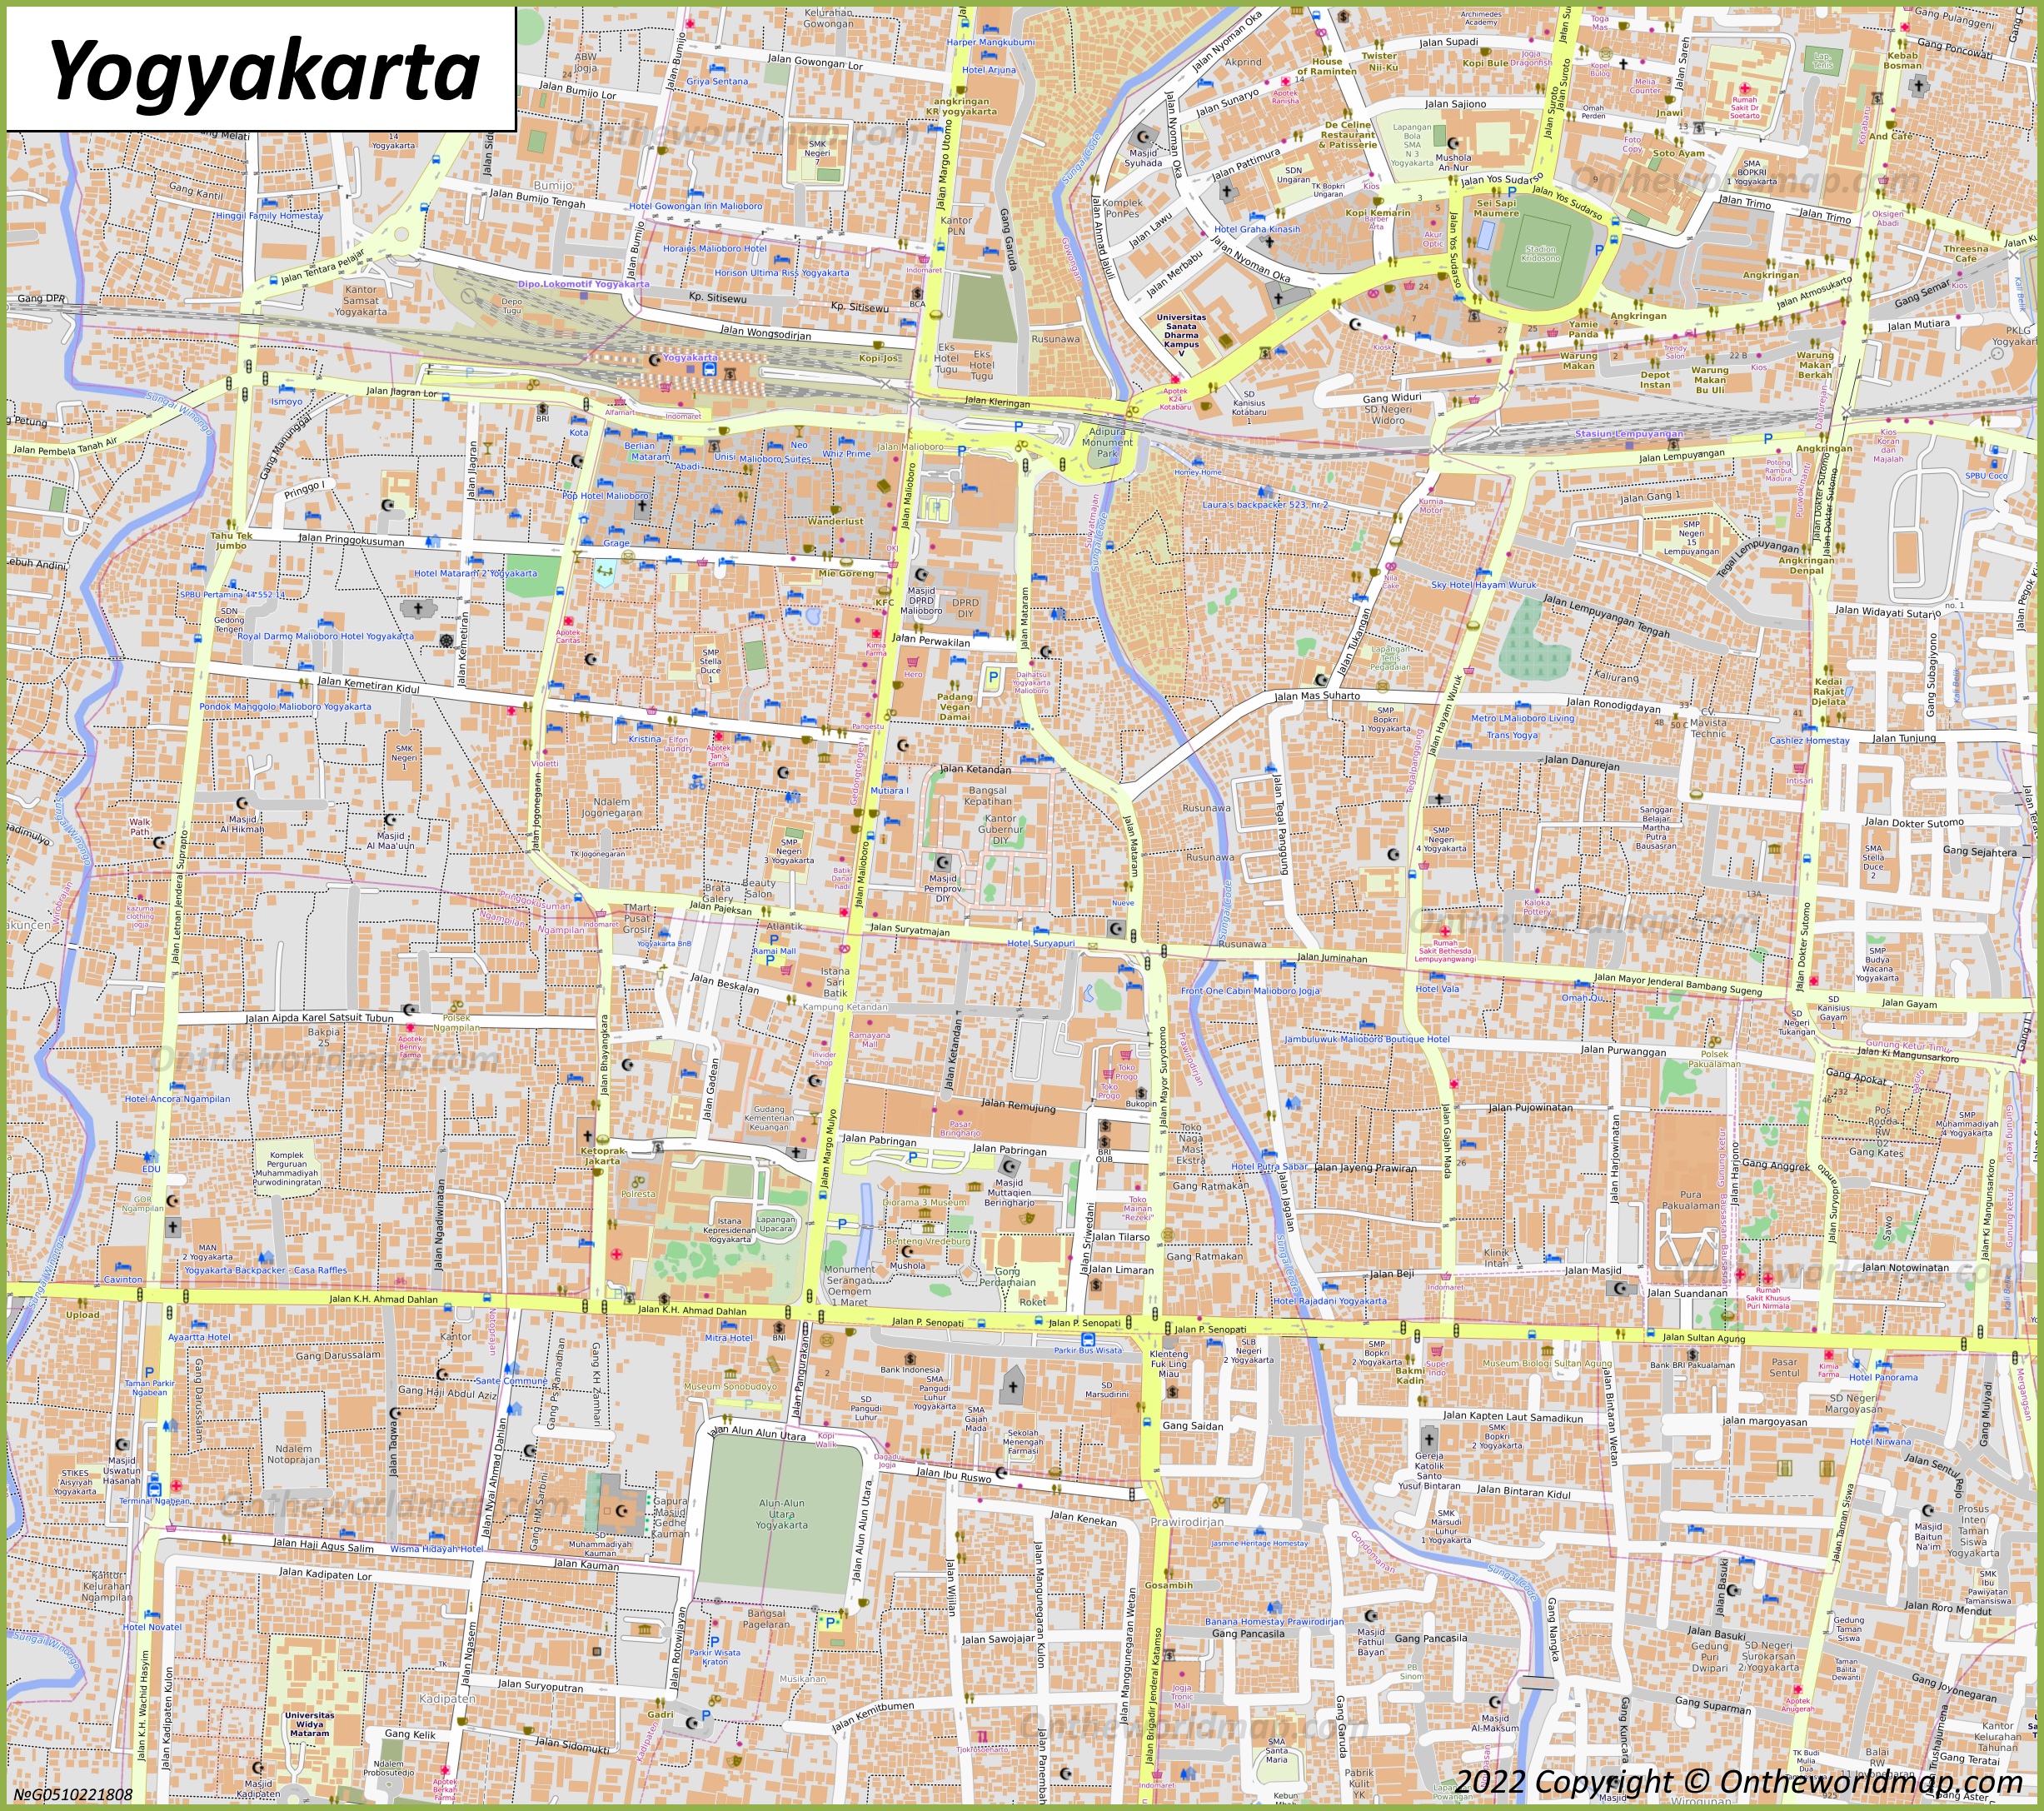 Yogyakarta City Centre Map